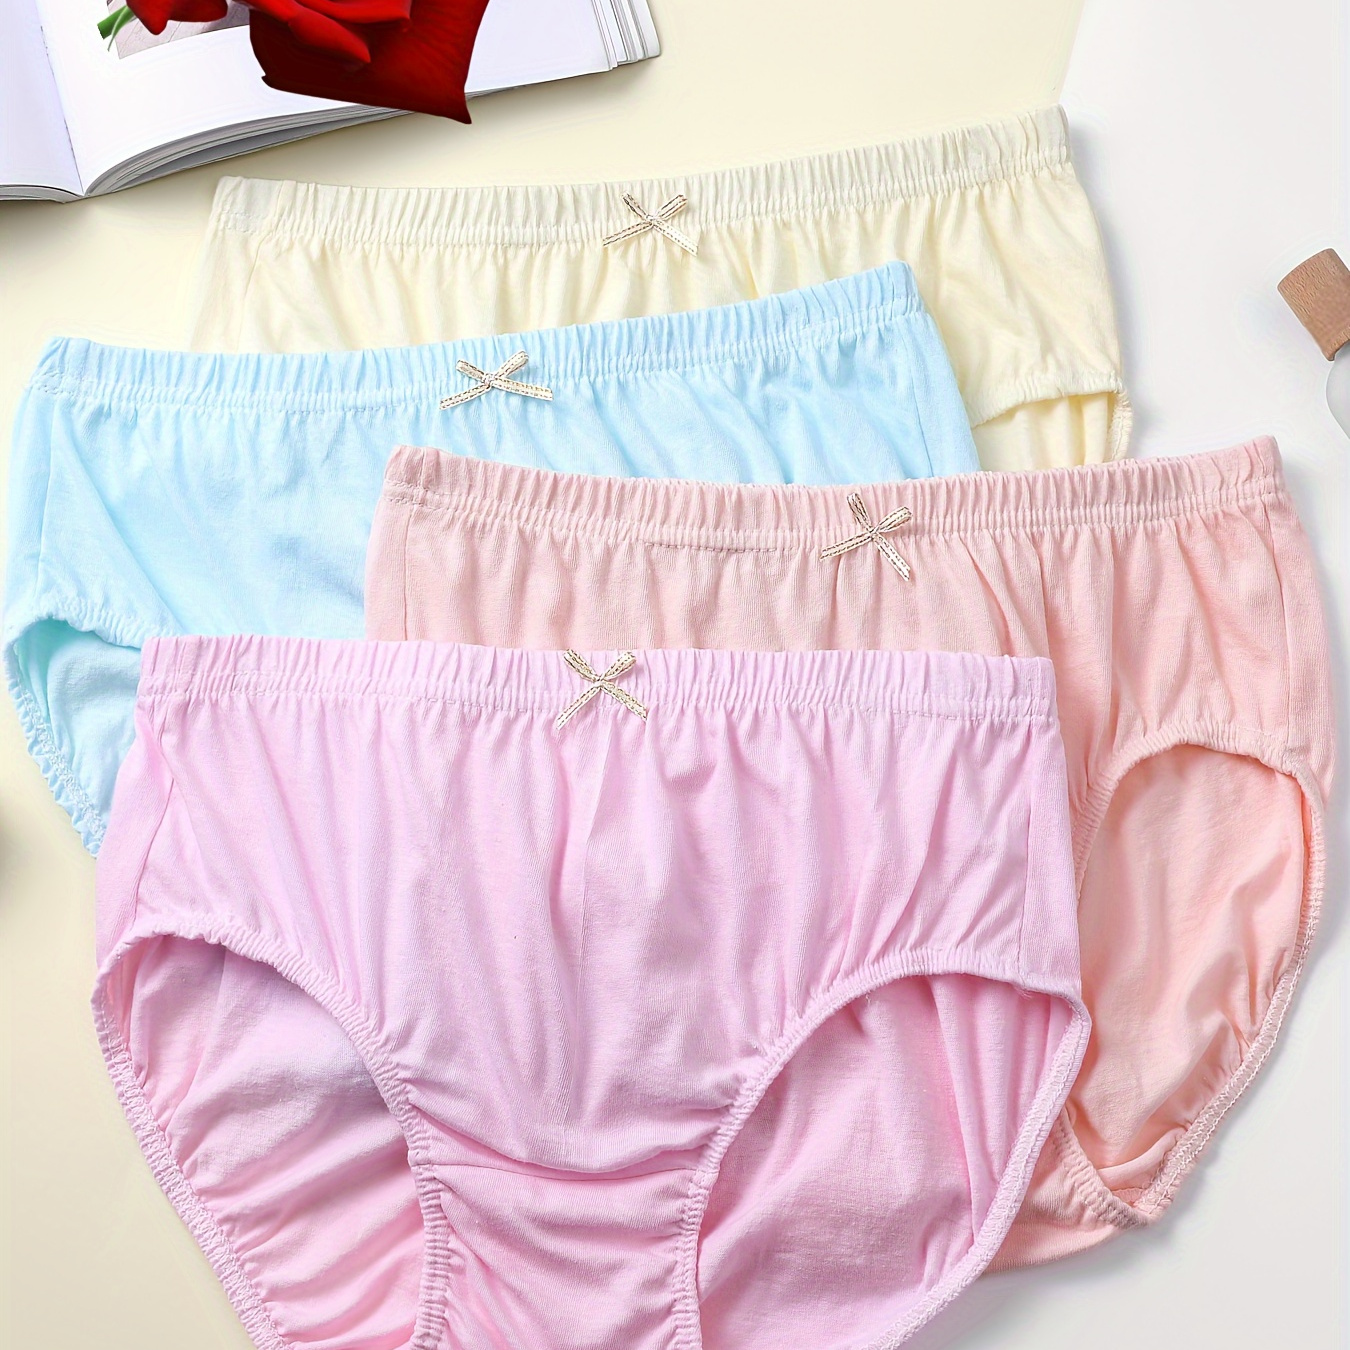 

6pcs Simple Solid Bow High Waist Briefs, Soft & Comfy Stretchy Panties, Women's Lingerie & Underwear